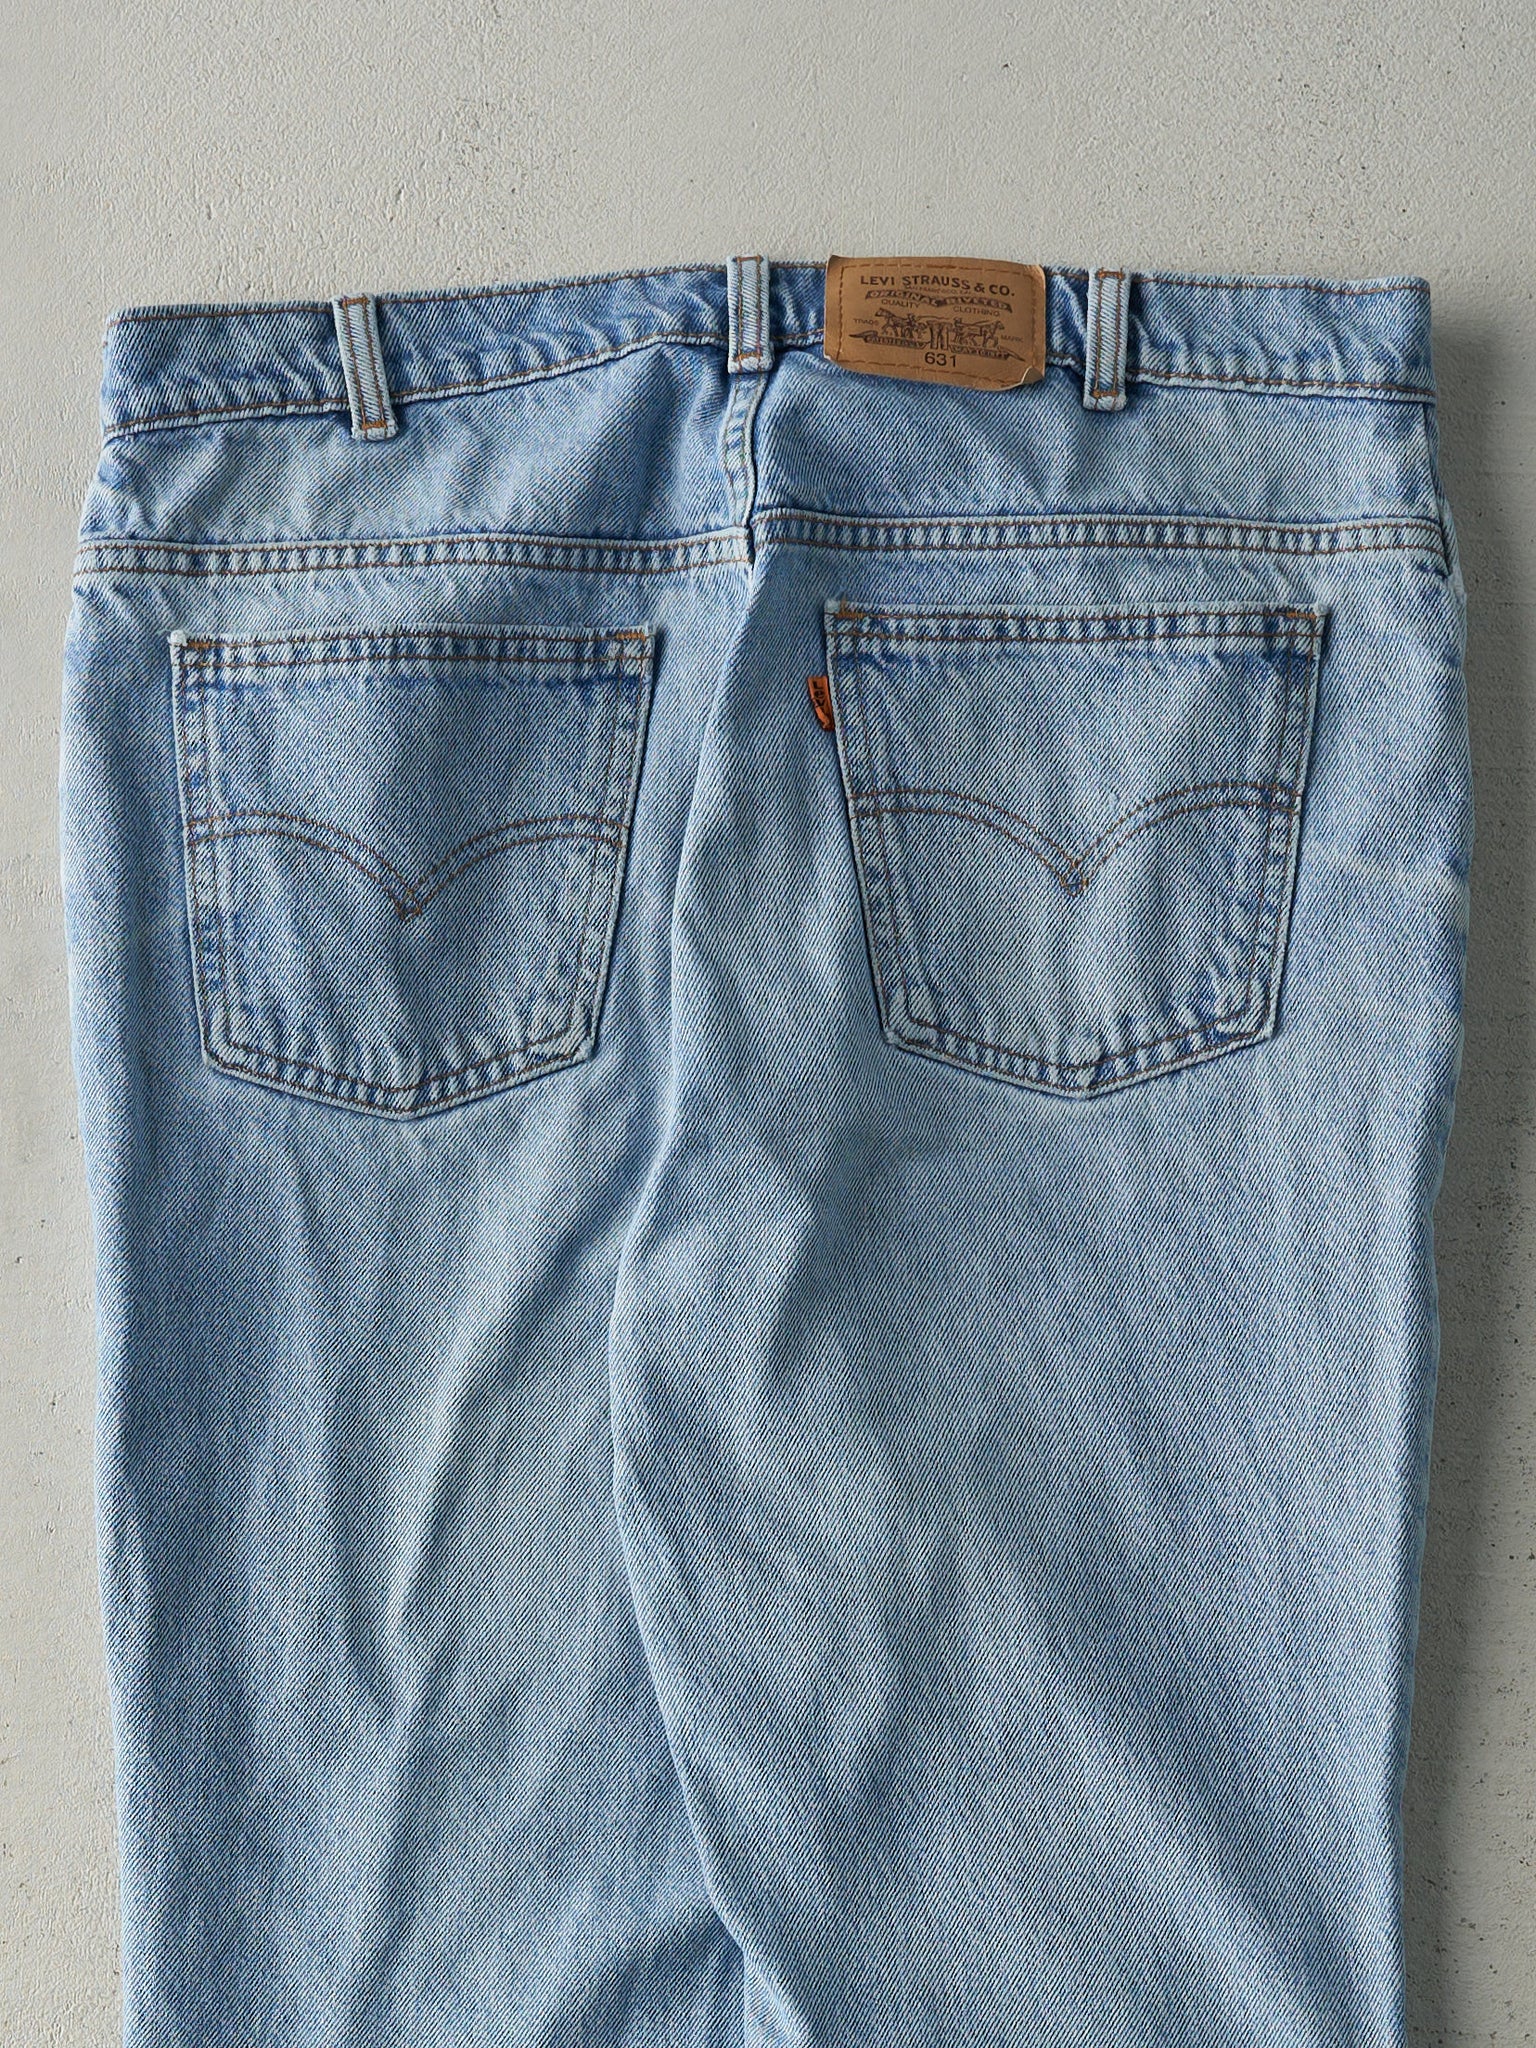 Vintage 80s Light Wash Levi's 631 Orange Tab Jeans (34x30)